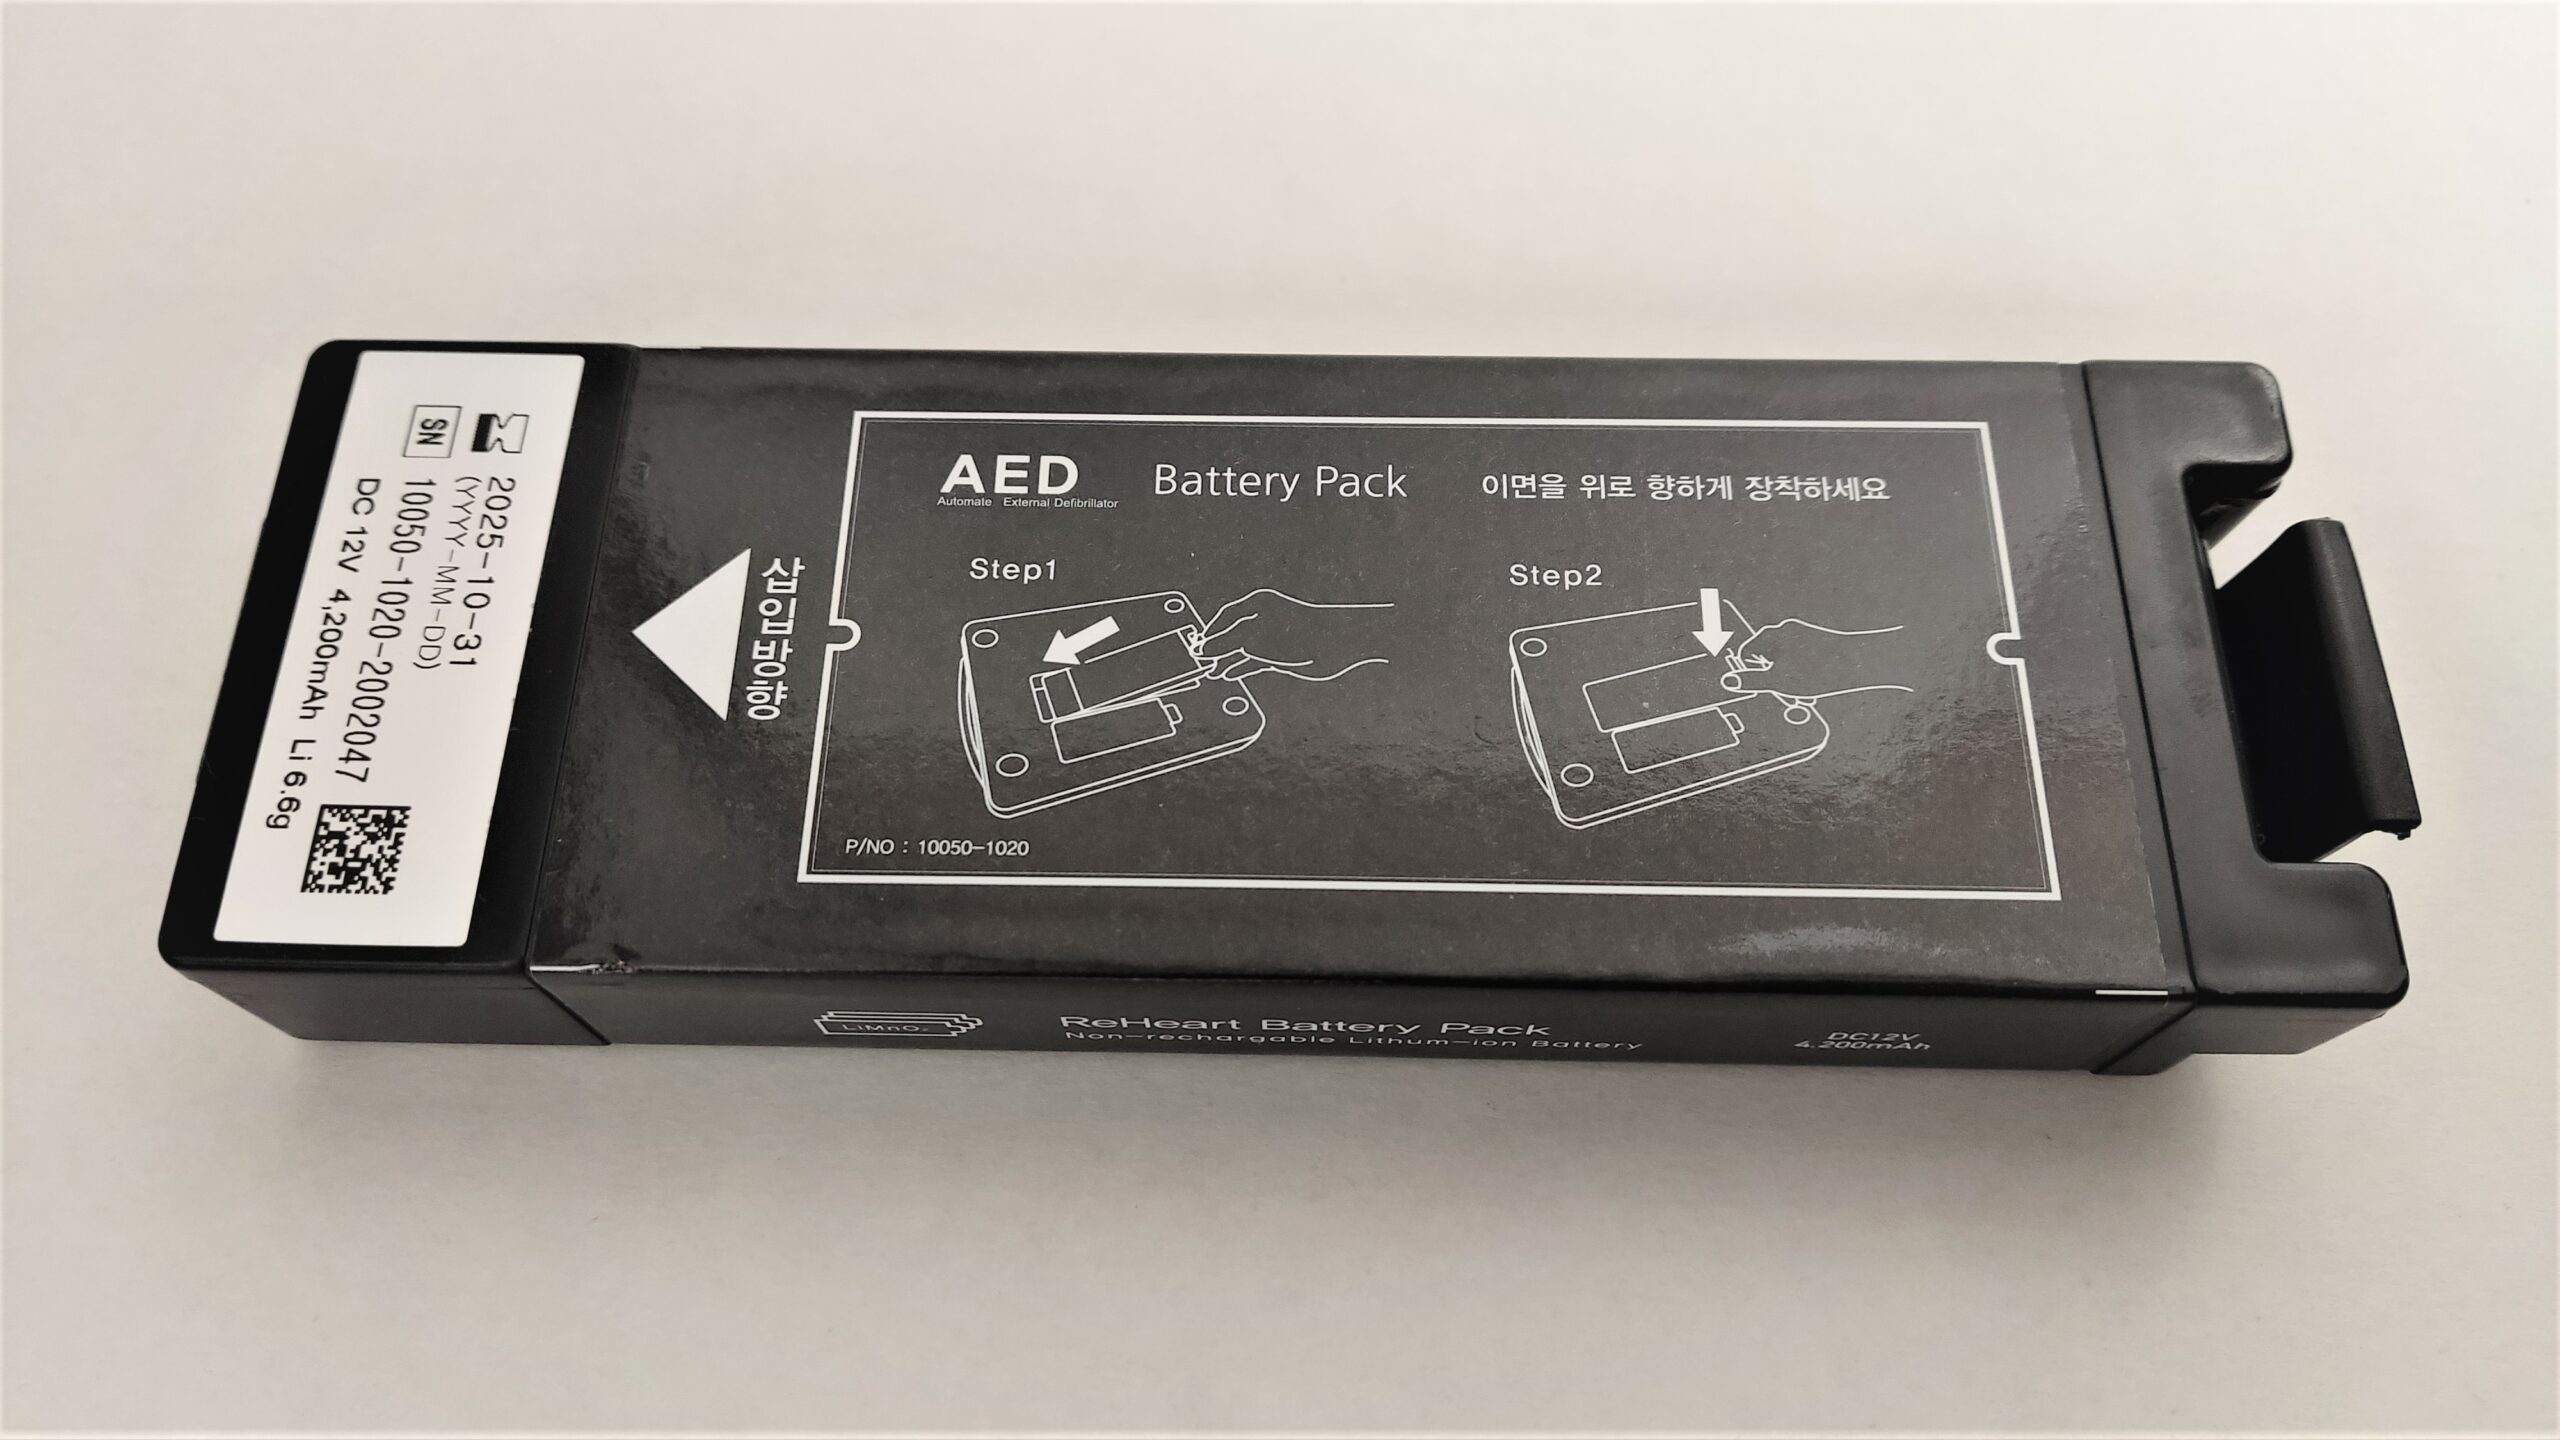 ResQ Battery Pack